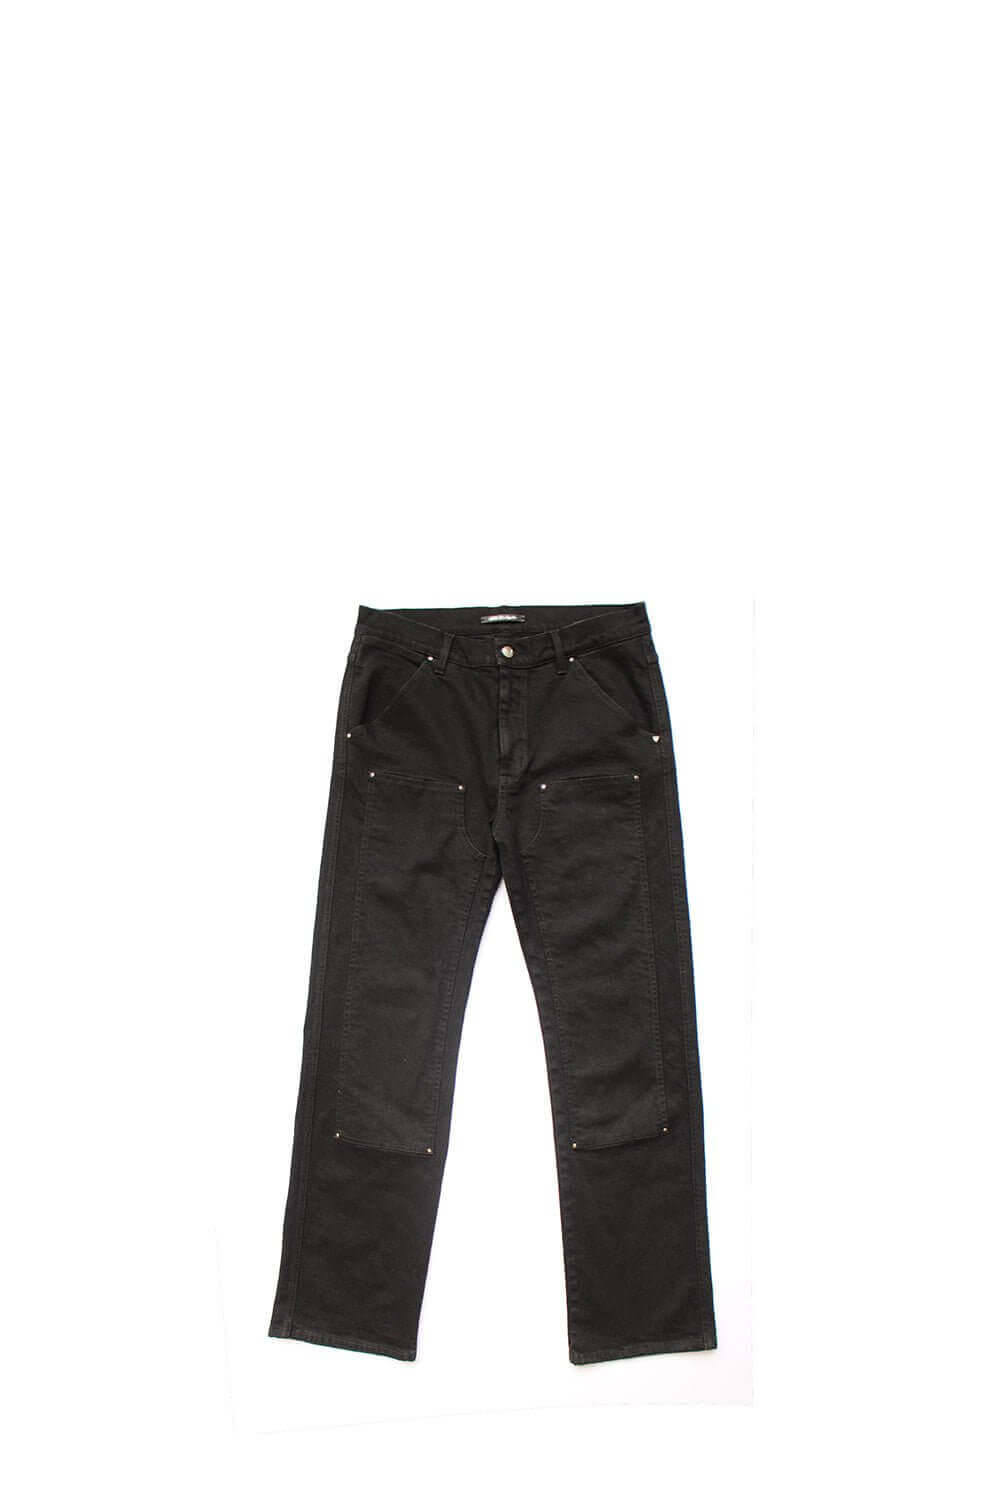 CARPENTER DENIM BLACK Carpenter jeans with front button and zip closure. metal logo patch. . Five pockets. Composition: 100% Cotton HTC LOS ANGELES